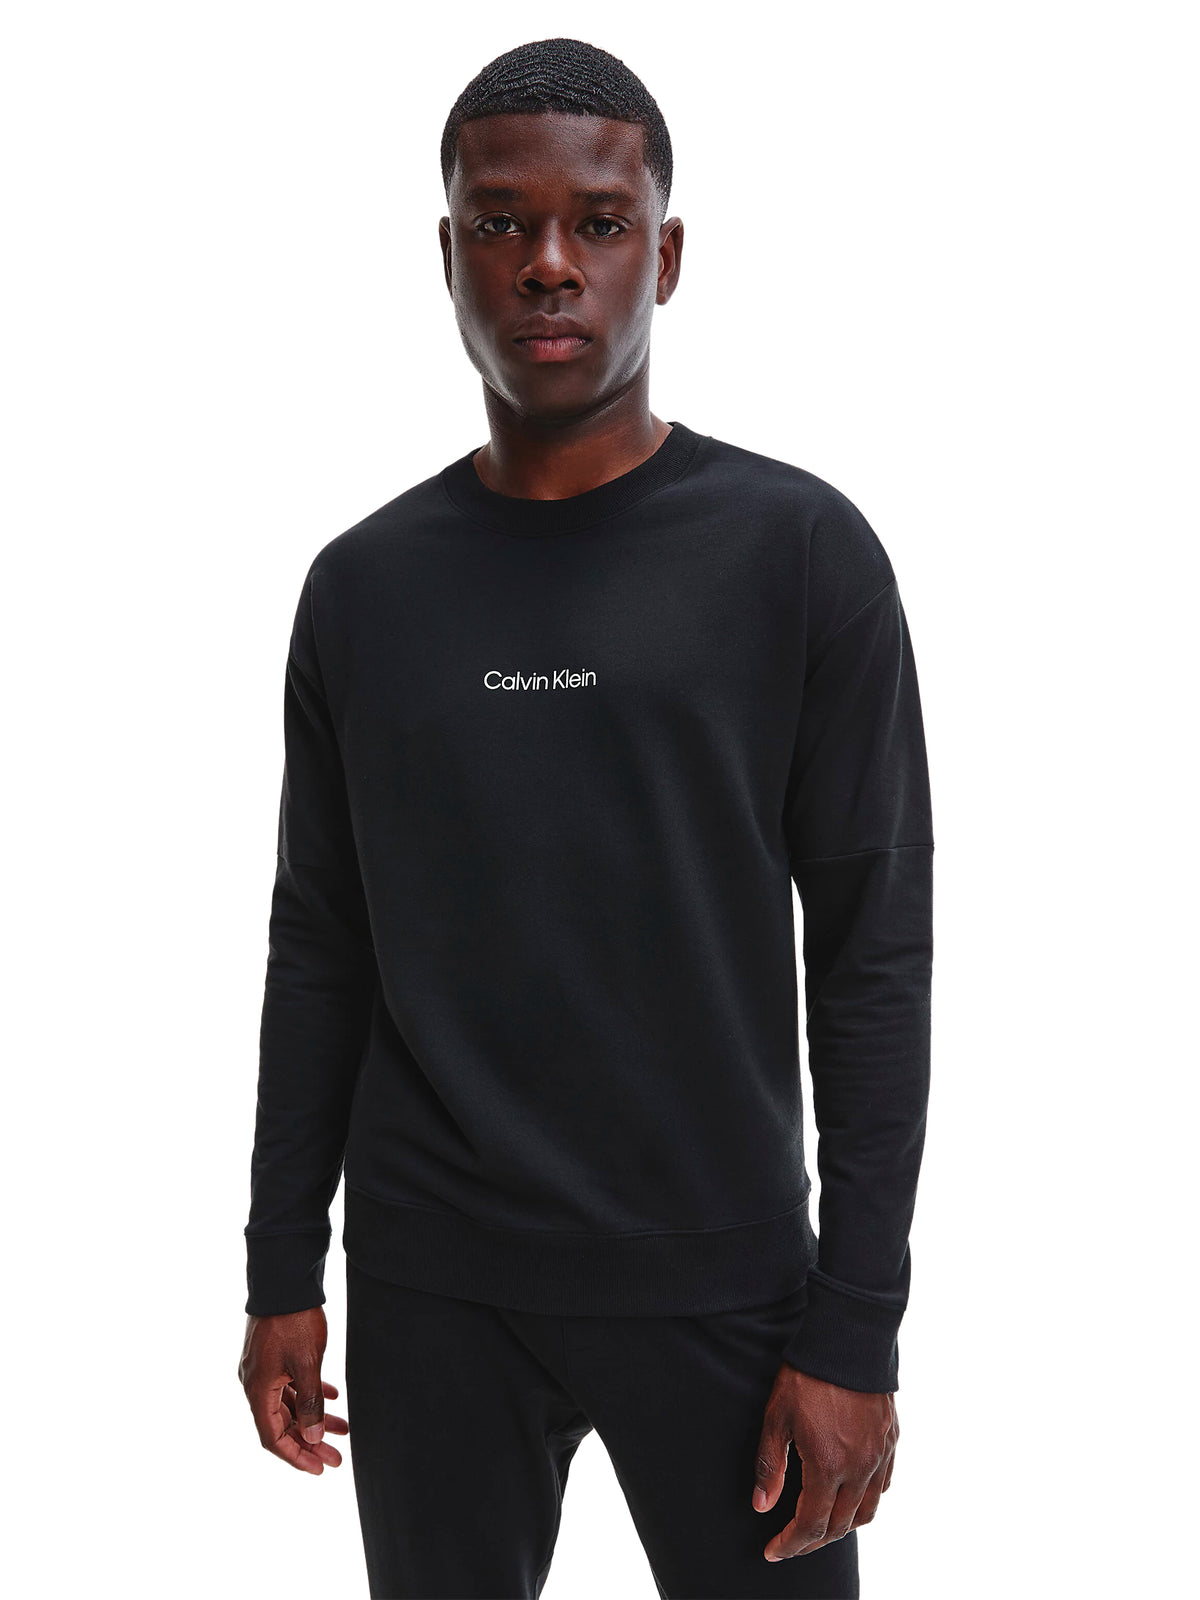 Calvin Klein Mens Lounge Crew Neck Sweatshirt - Modern Structure, 01, 000Nm2172E, Black